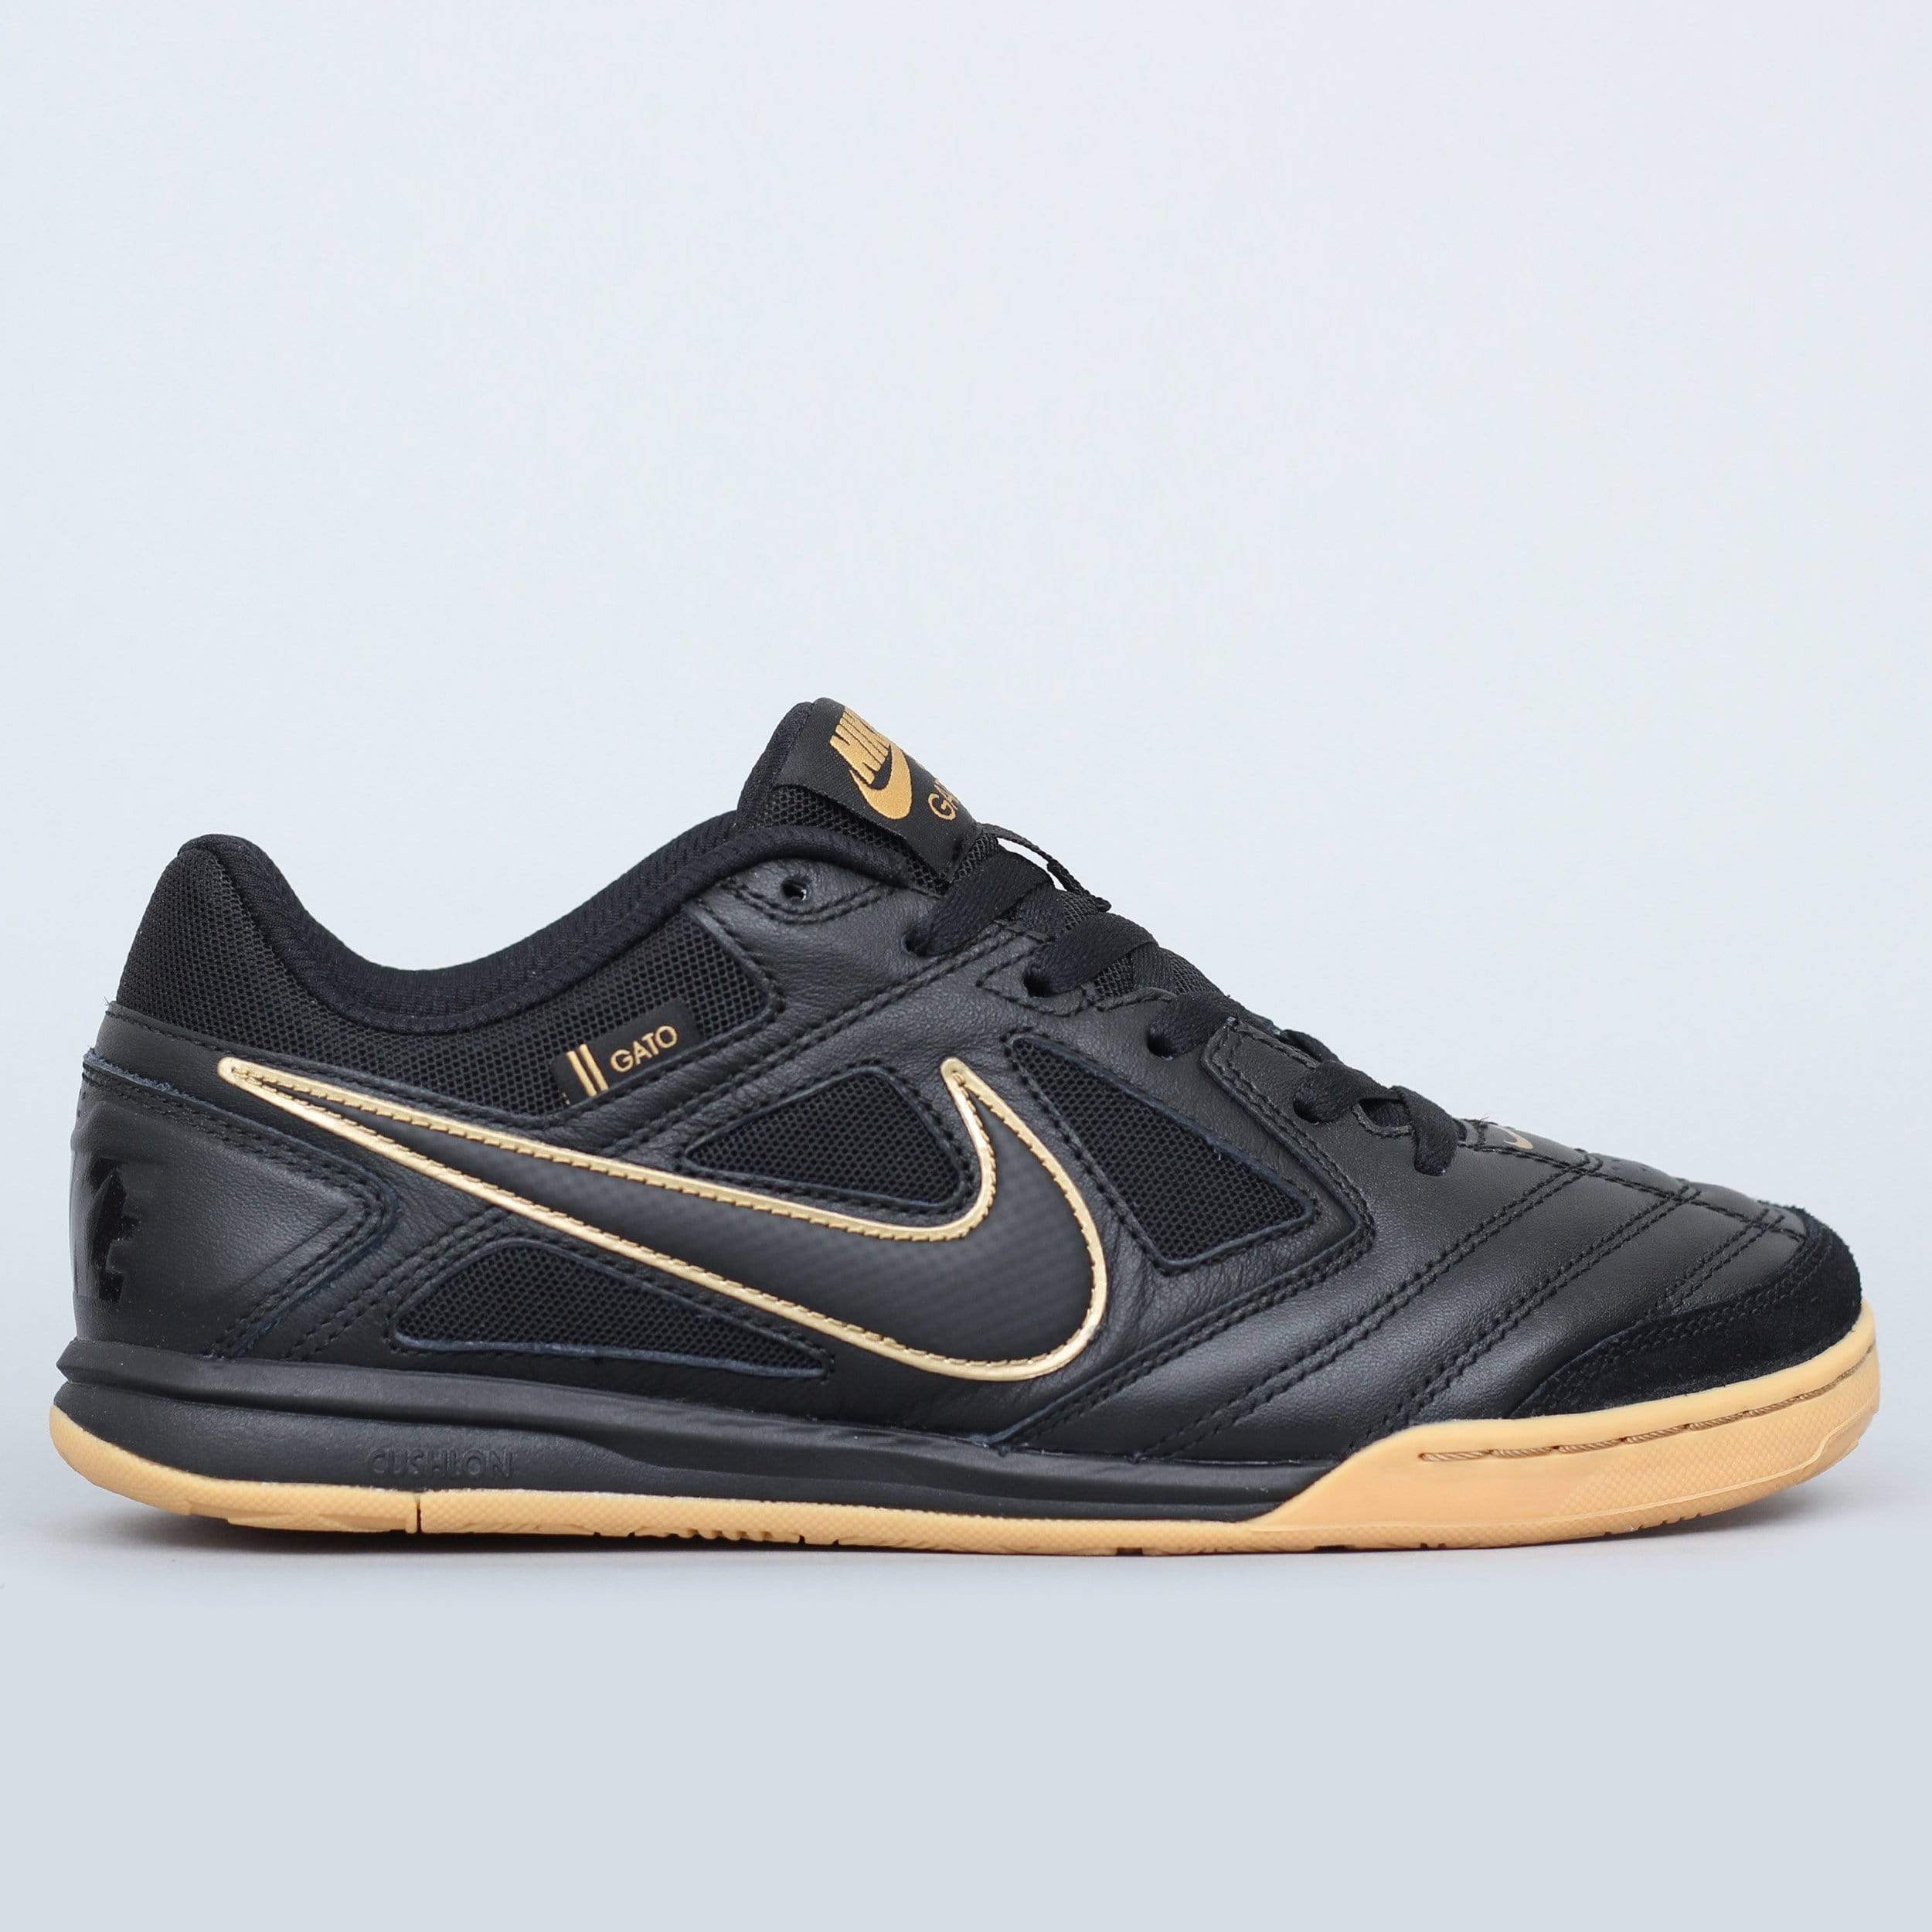 Muñeco de peluche Nuez Asesinar Nike SB Gato Skateboard Shoes Black / Black - Metallic Gold - Slam City  Skates